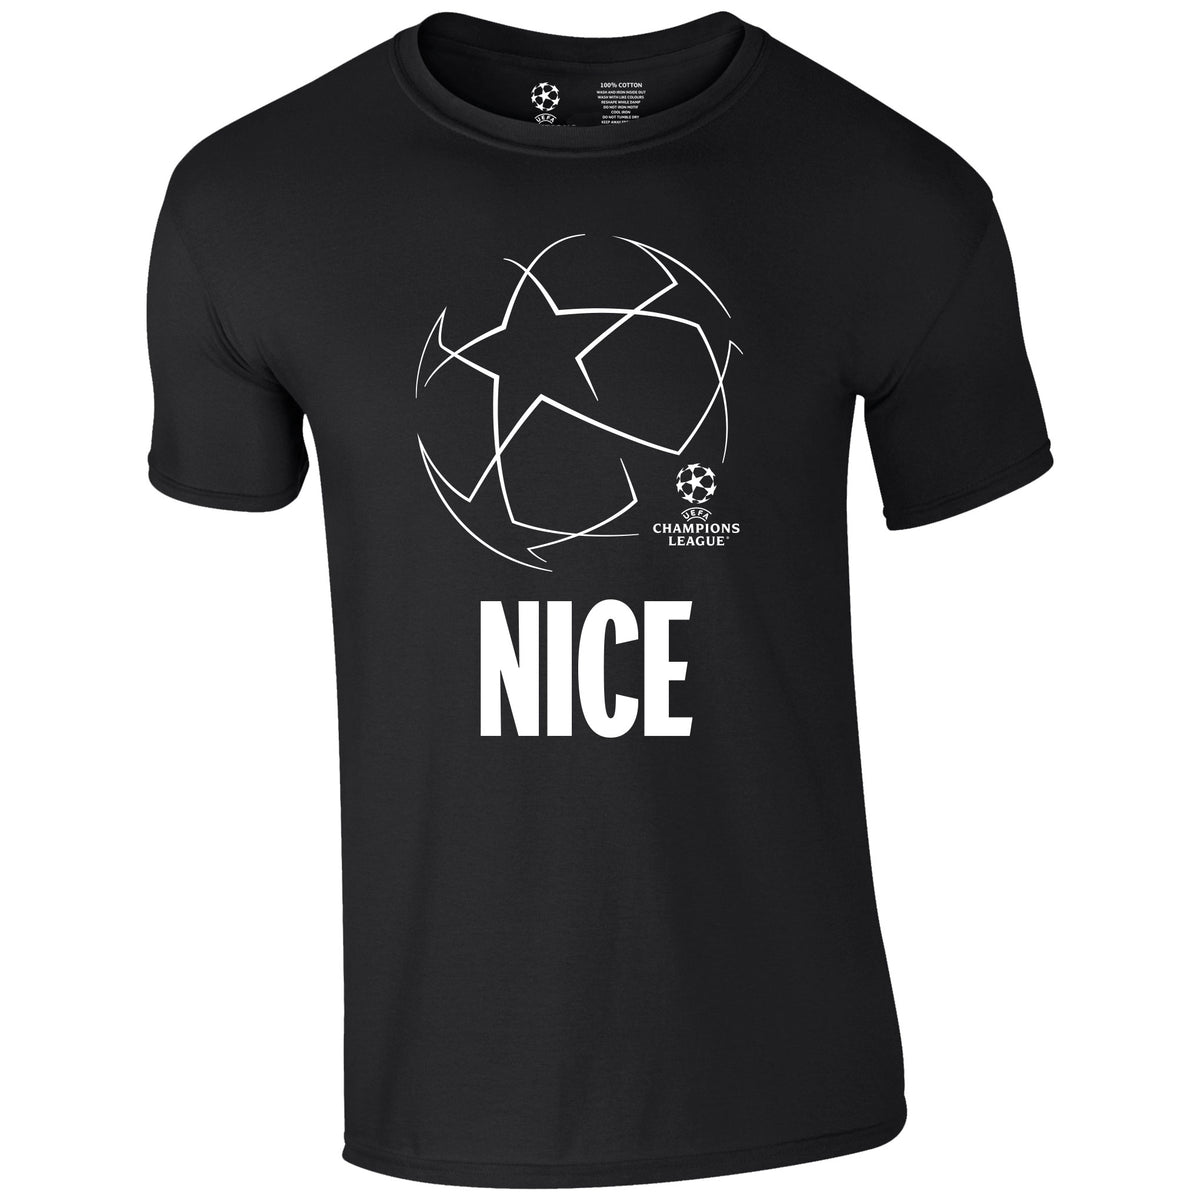 Champions League Starball Nice City T-Shirt Black